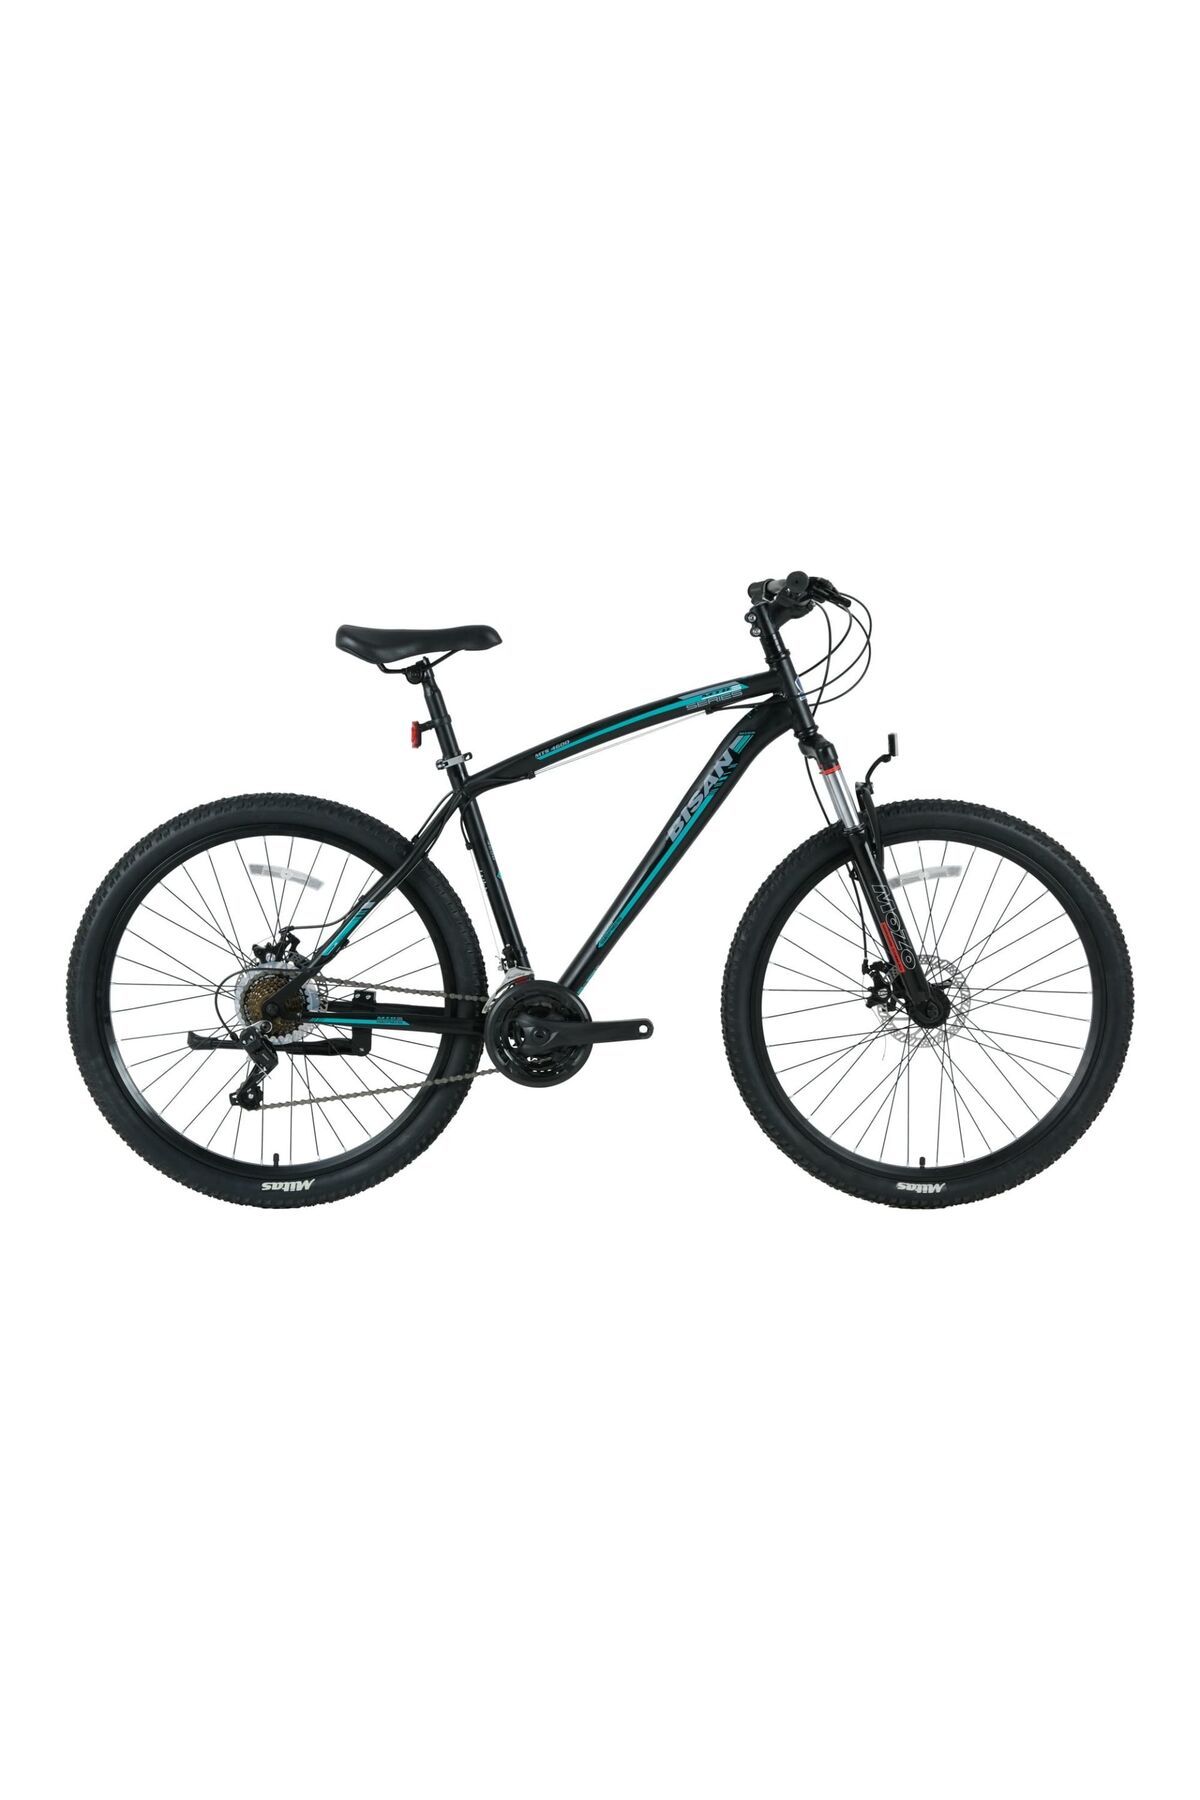 Bisan BİSAN MTS 4600 21 Vites 26 Jant MD Dağ Bisikleti MTB Siyah - Yeşil 18''/46CM